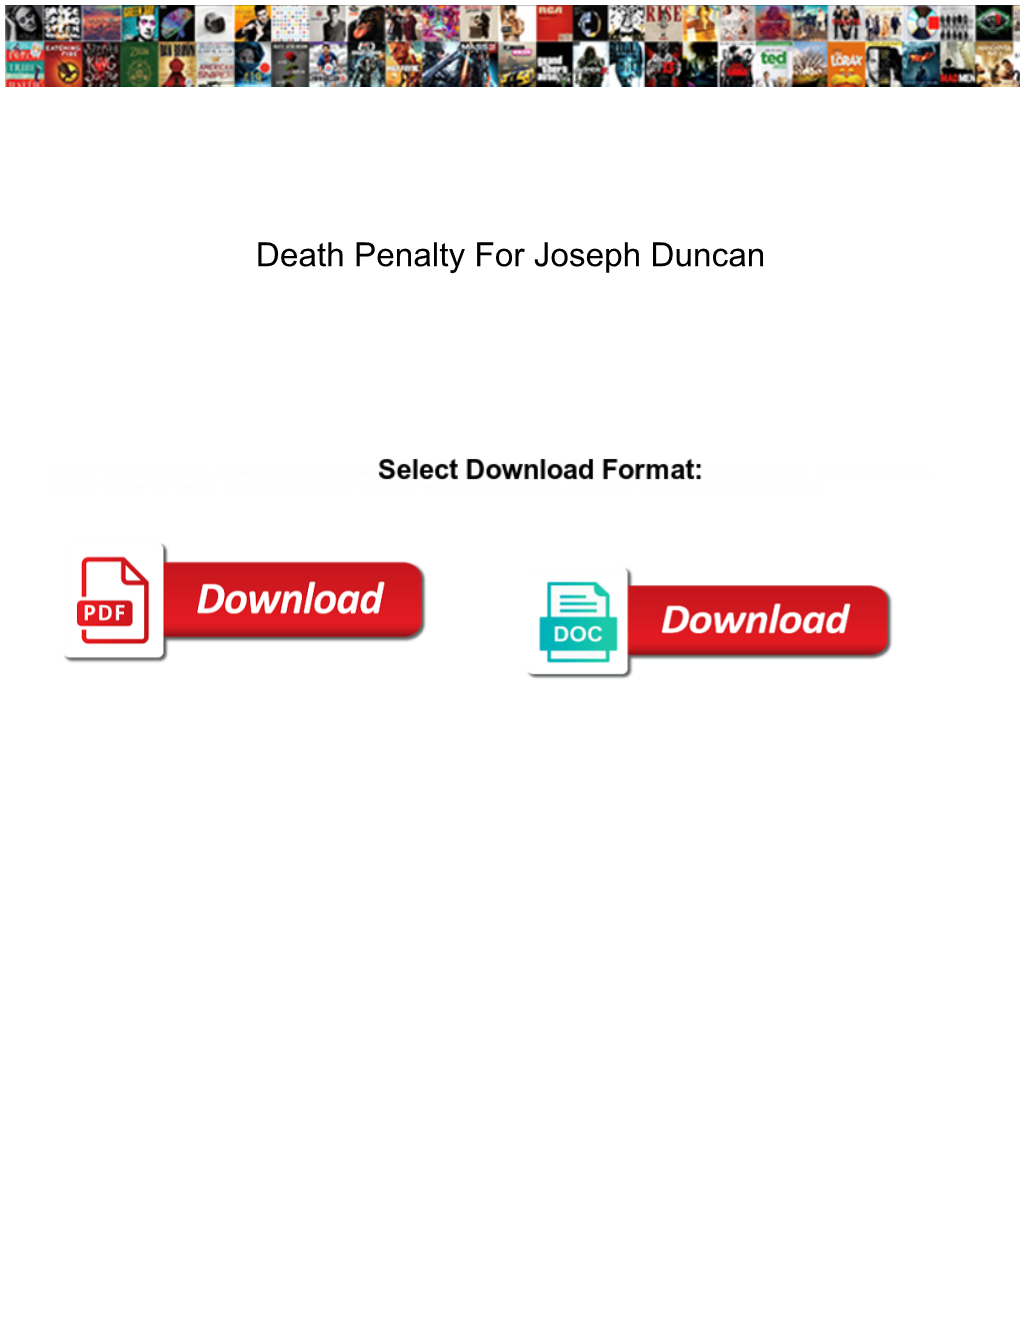 Death Penalty for Joseph Duncan